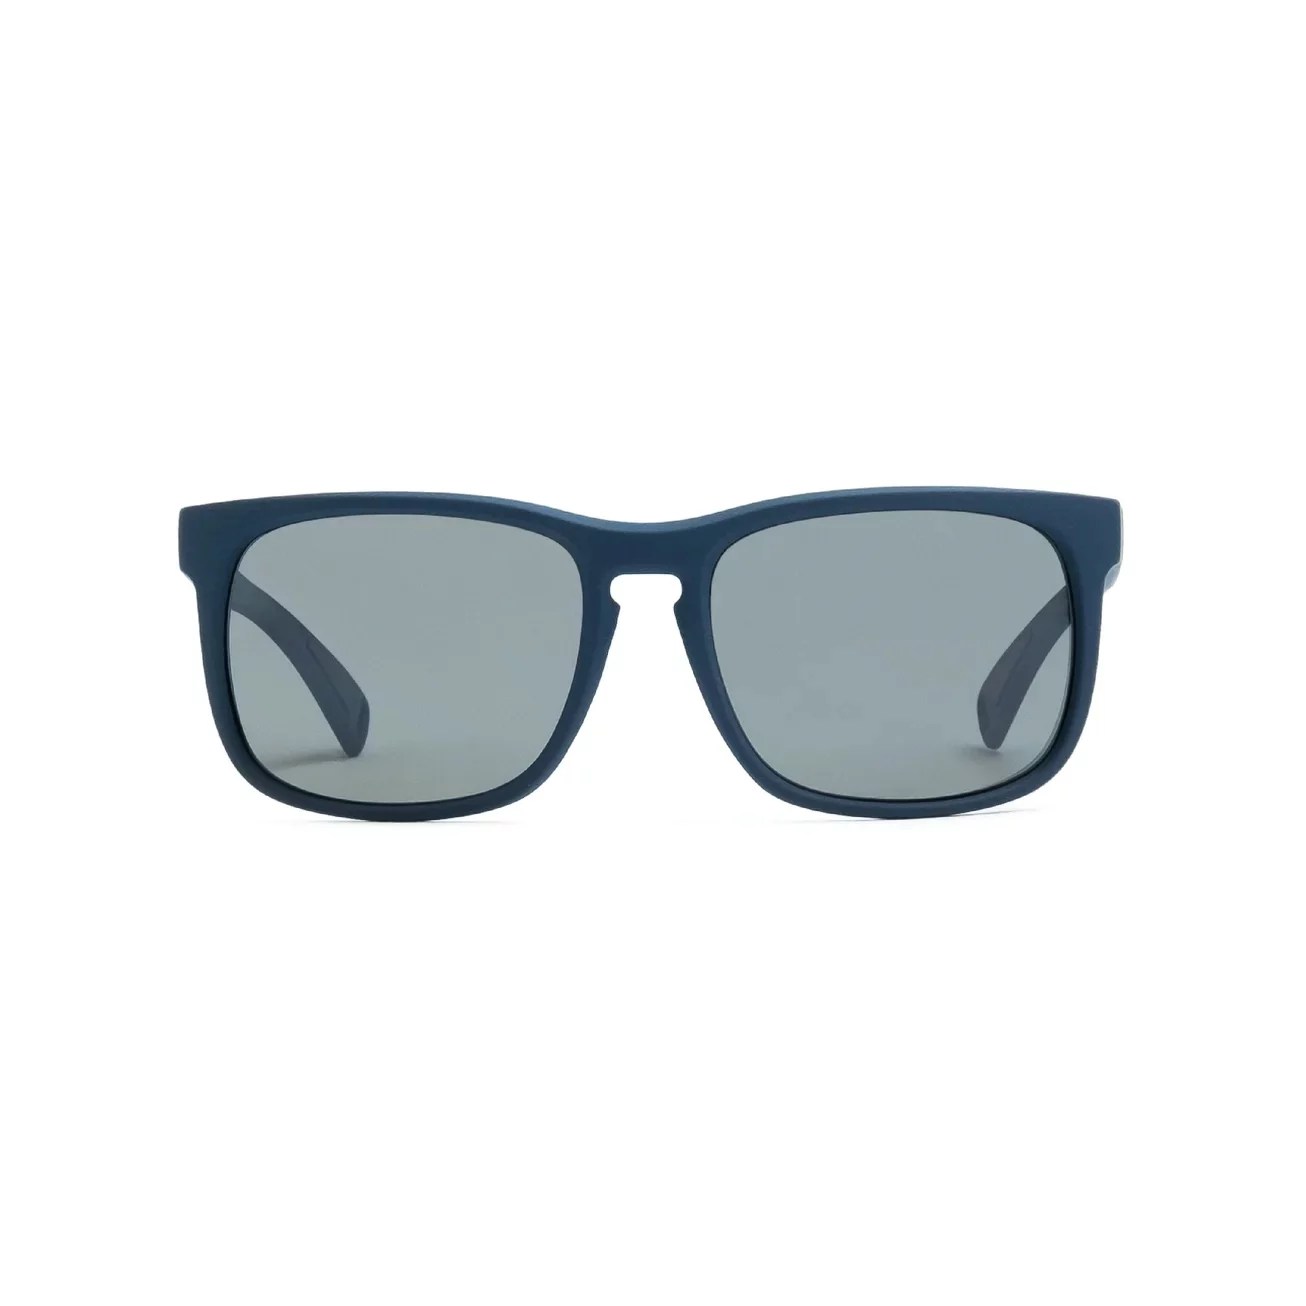 Glade Townie Sunglasses, sunglasses for tennis